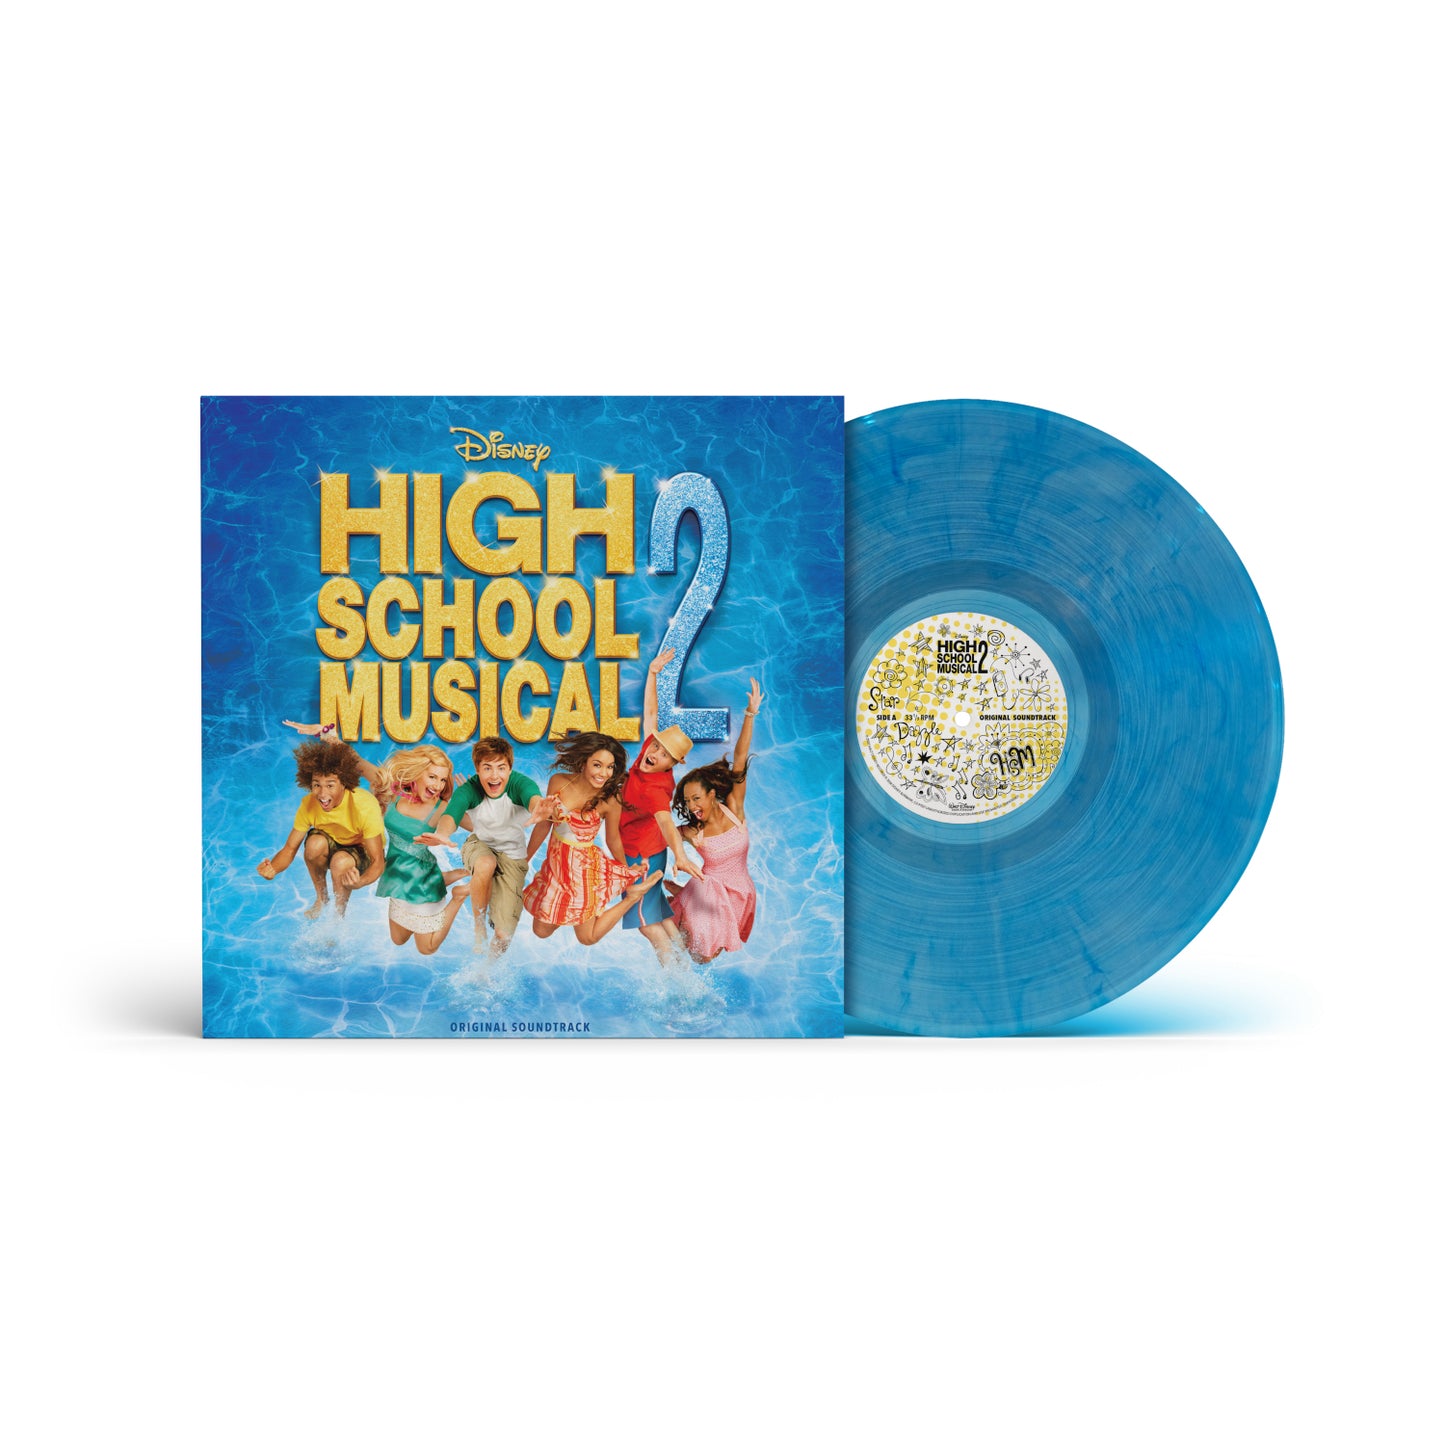 High School Musical Cast - High School Musical 2 (Original Soundtrack) LP